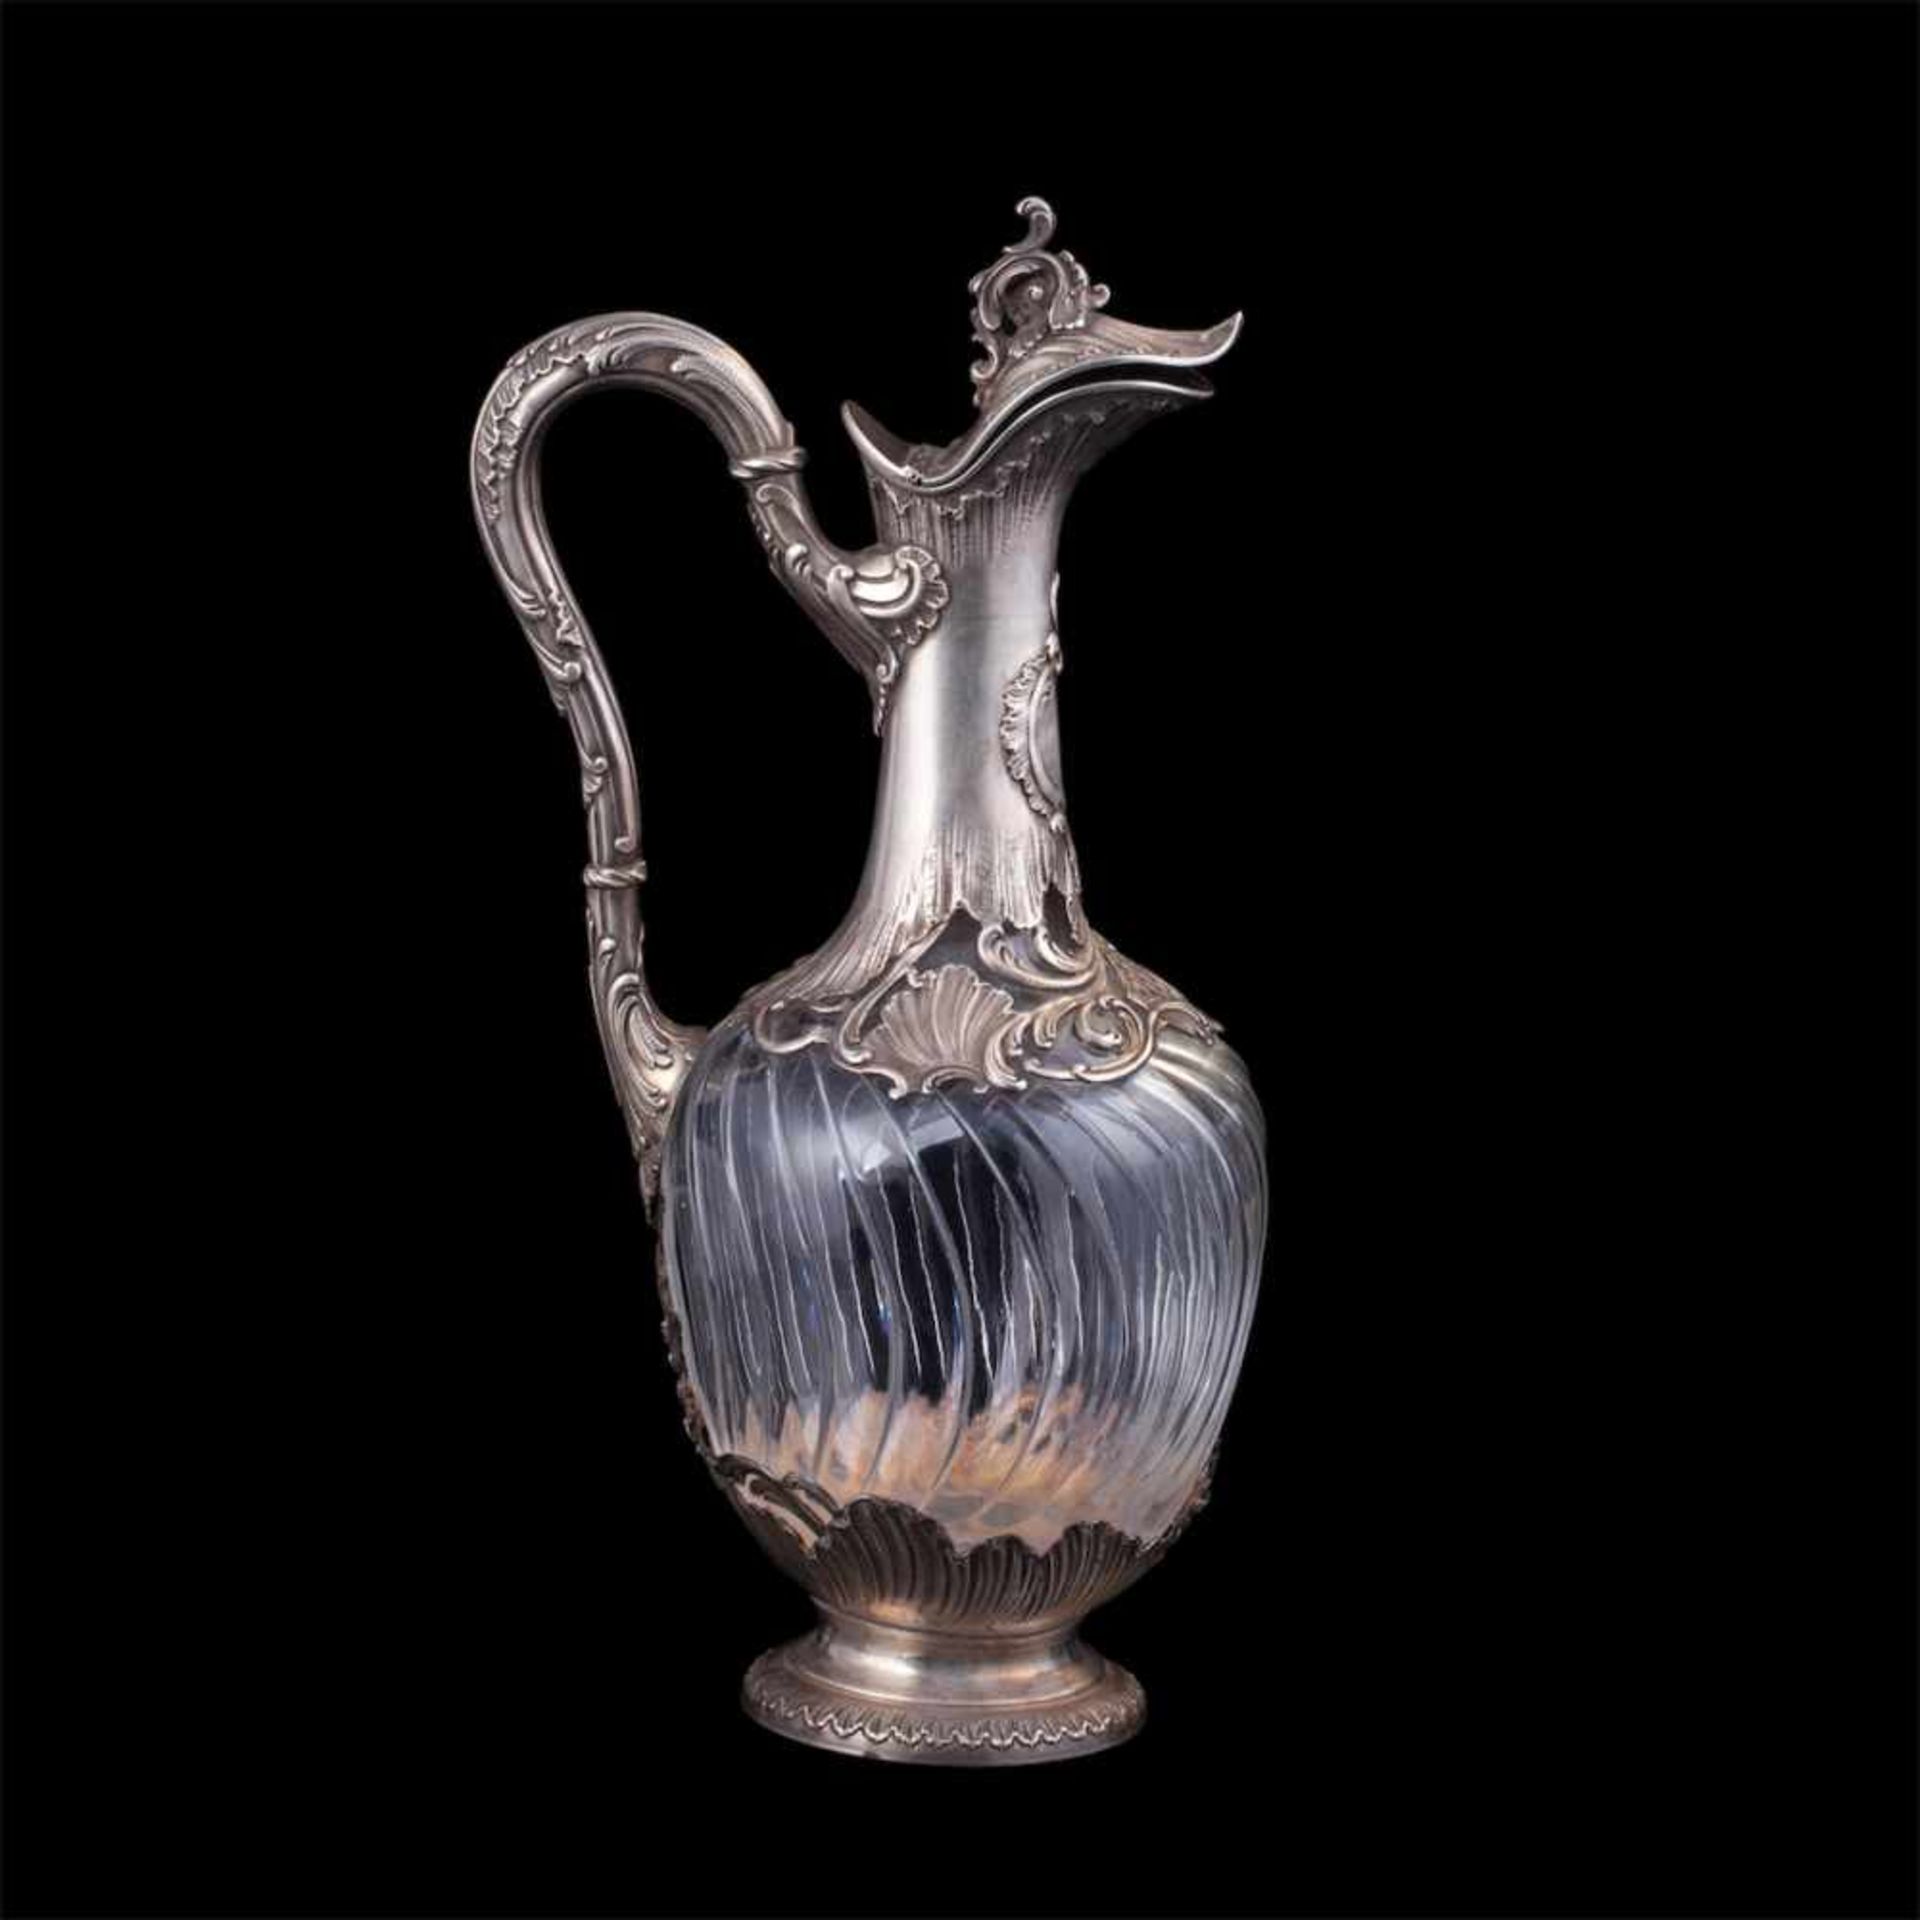 An elegant French silver mounted claret jug